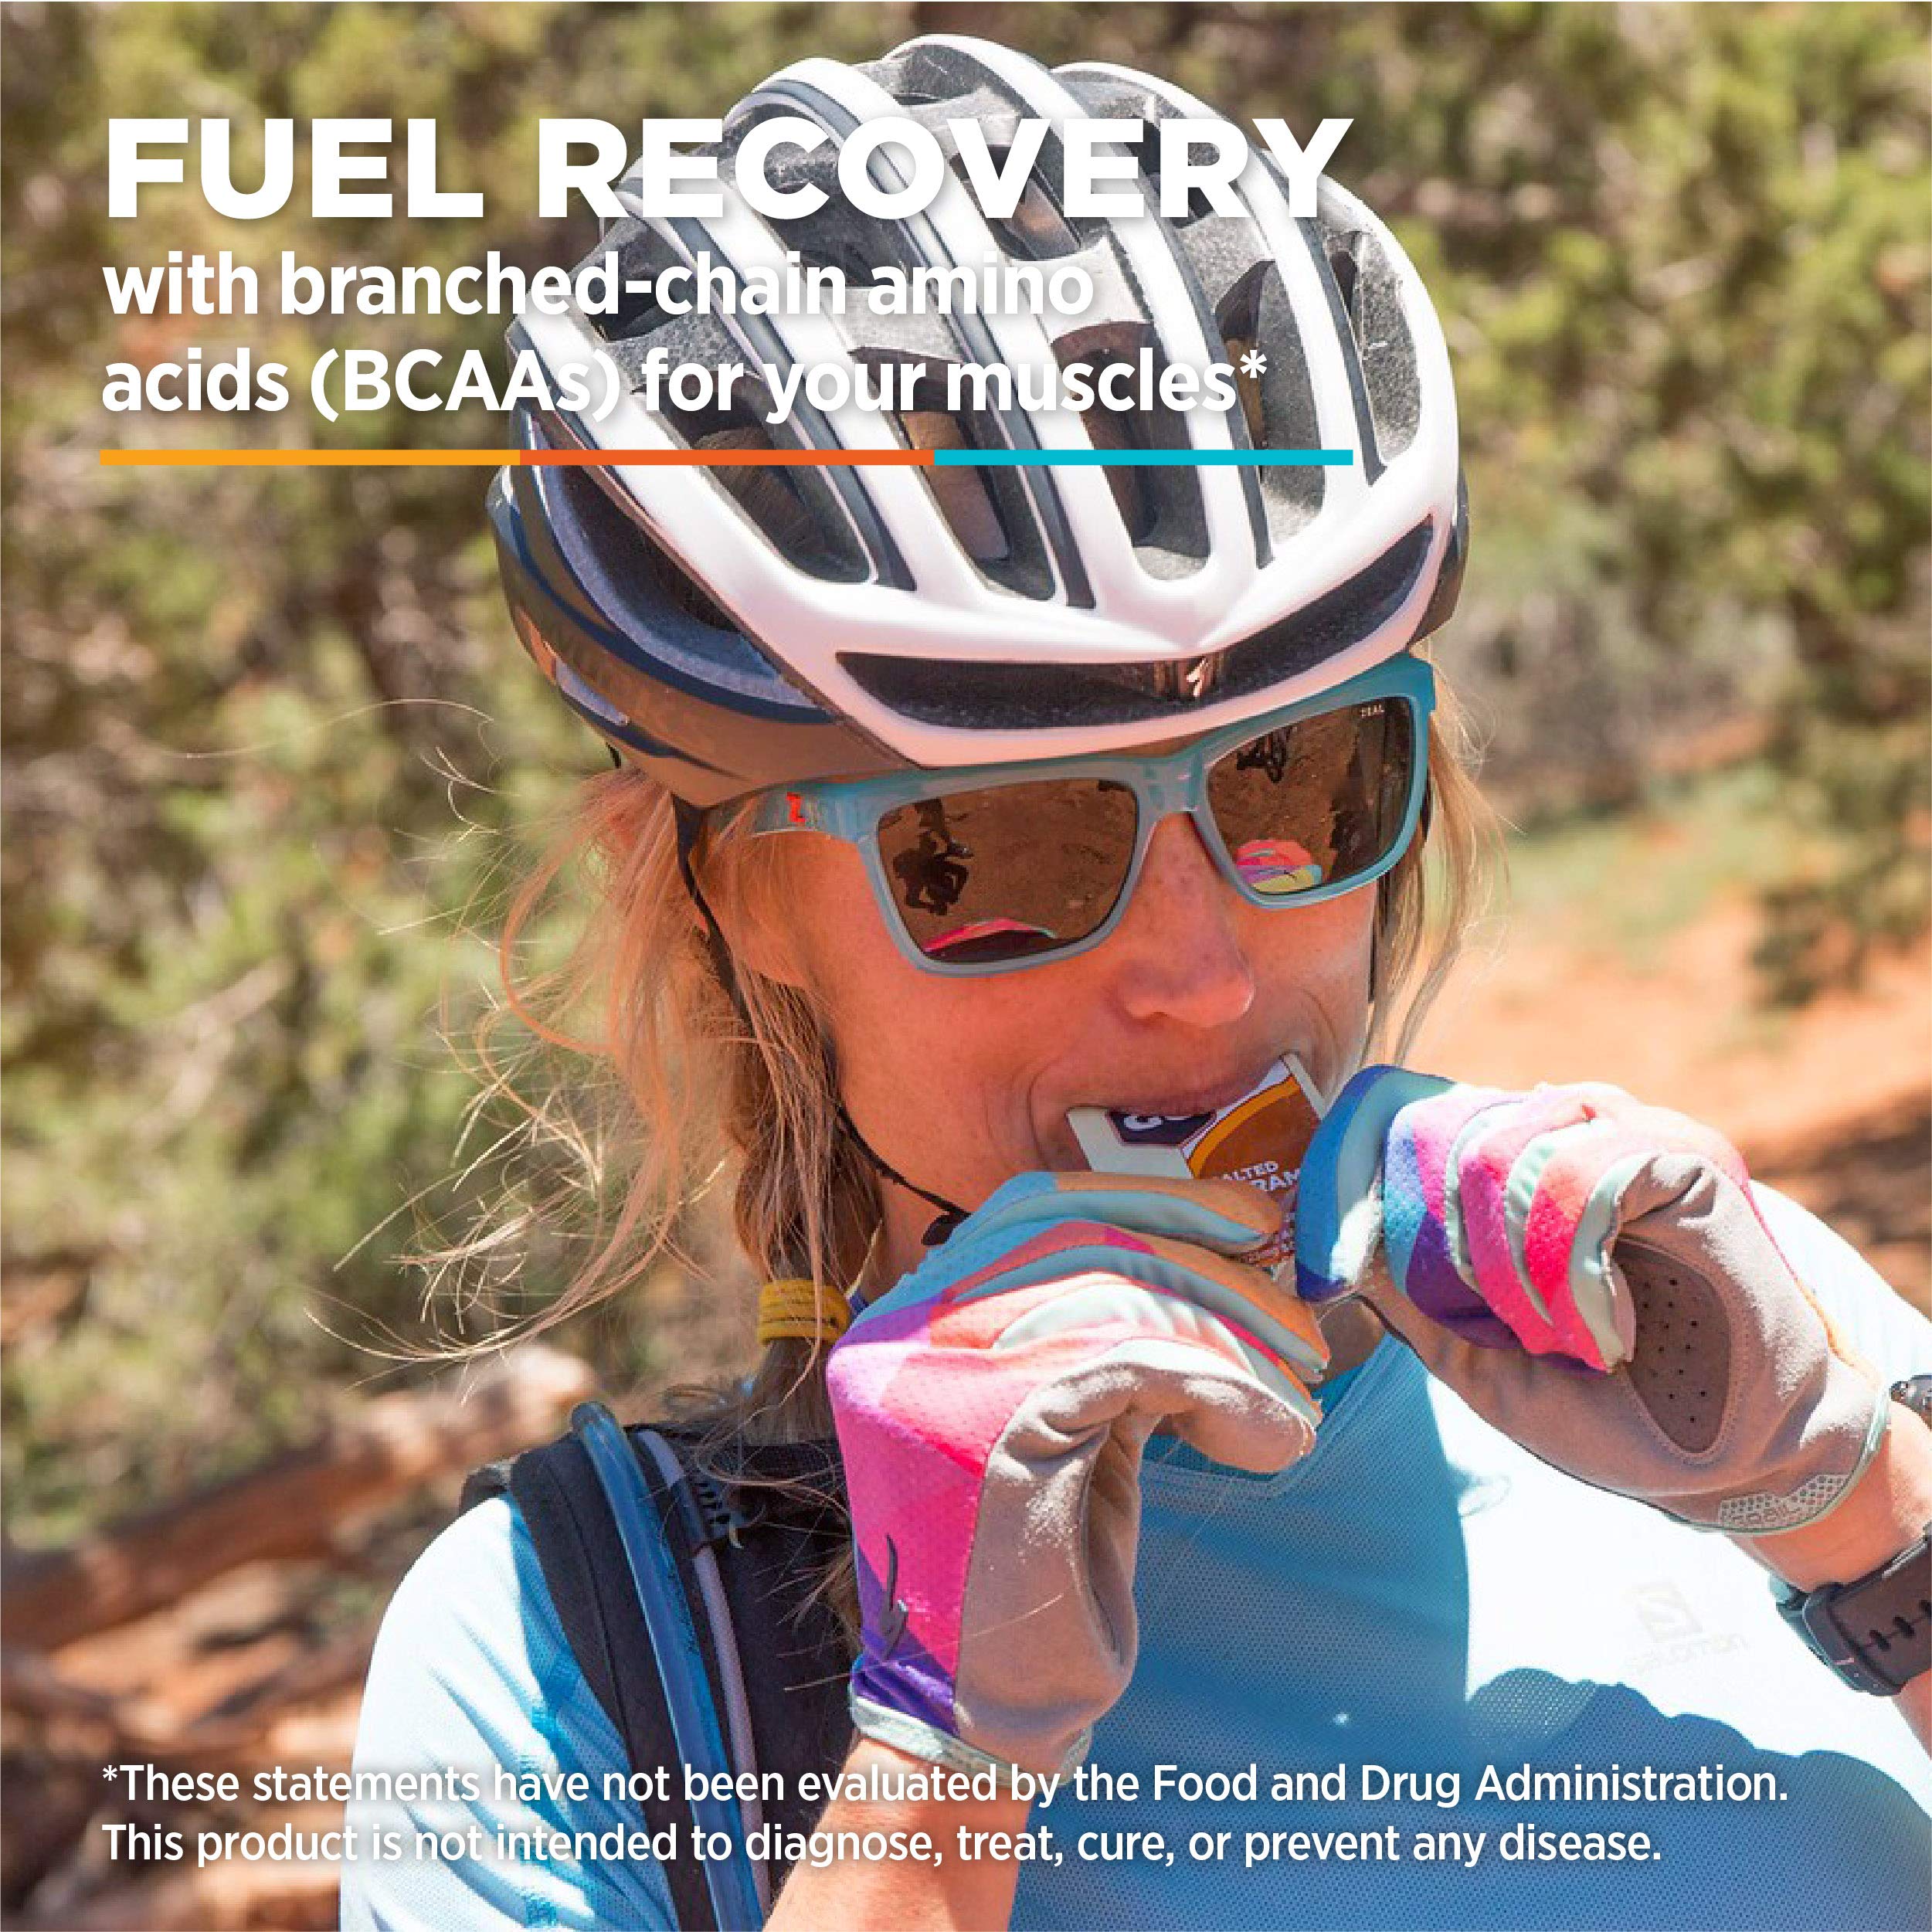 GU Energy Original Sports Nutrition Energy Gel, 24-Count, Assorted Indulgent Flavors